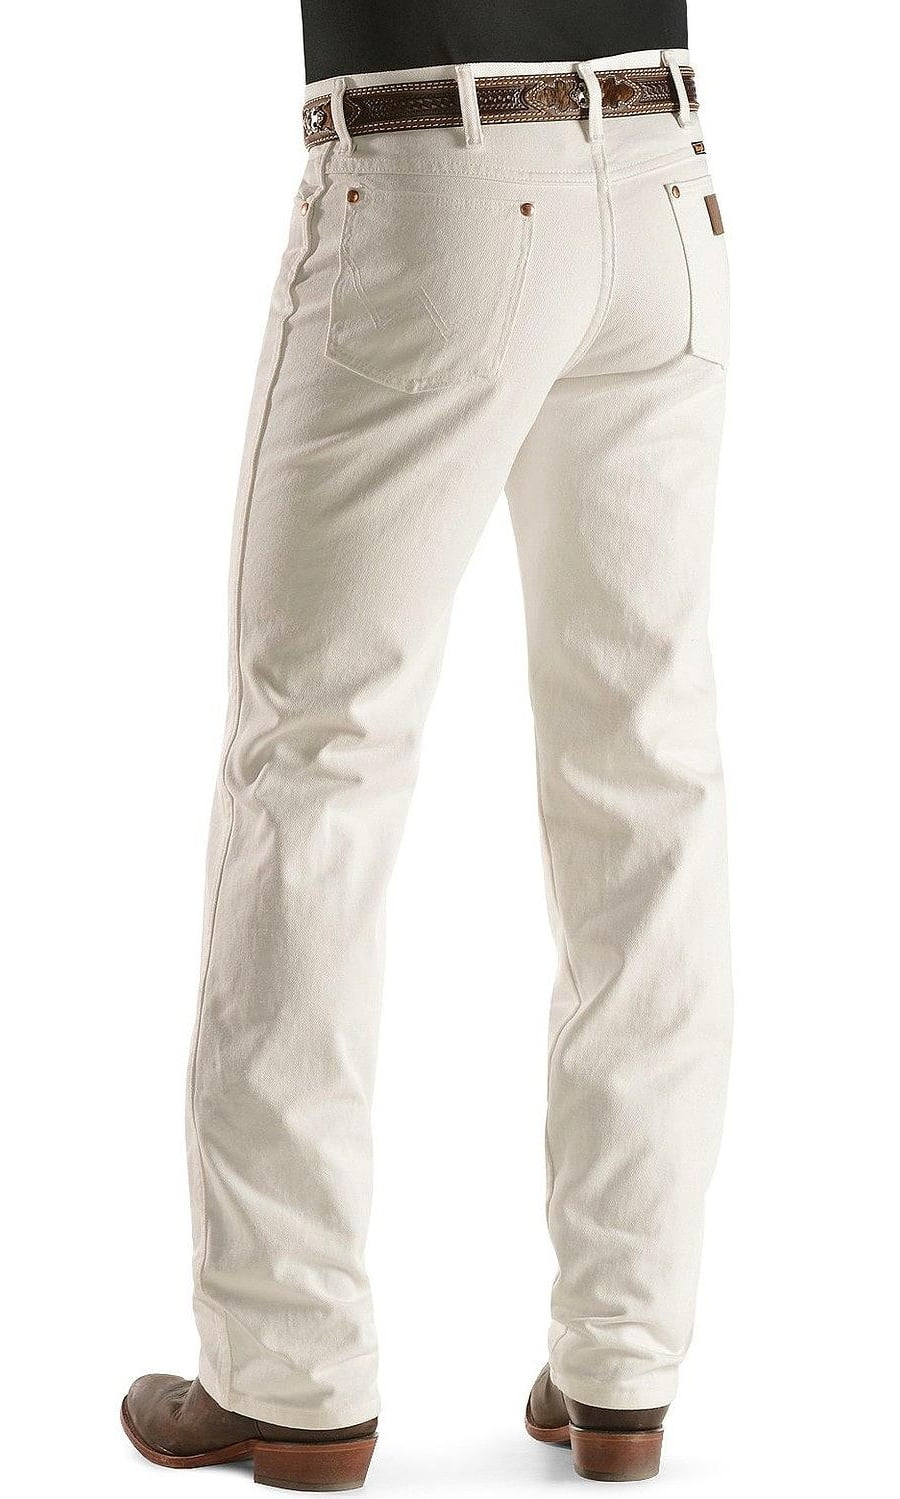 Wrangler Men's Cowboy cut Slim Fit Jean, white, 28wx32l - Walmart.com